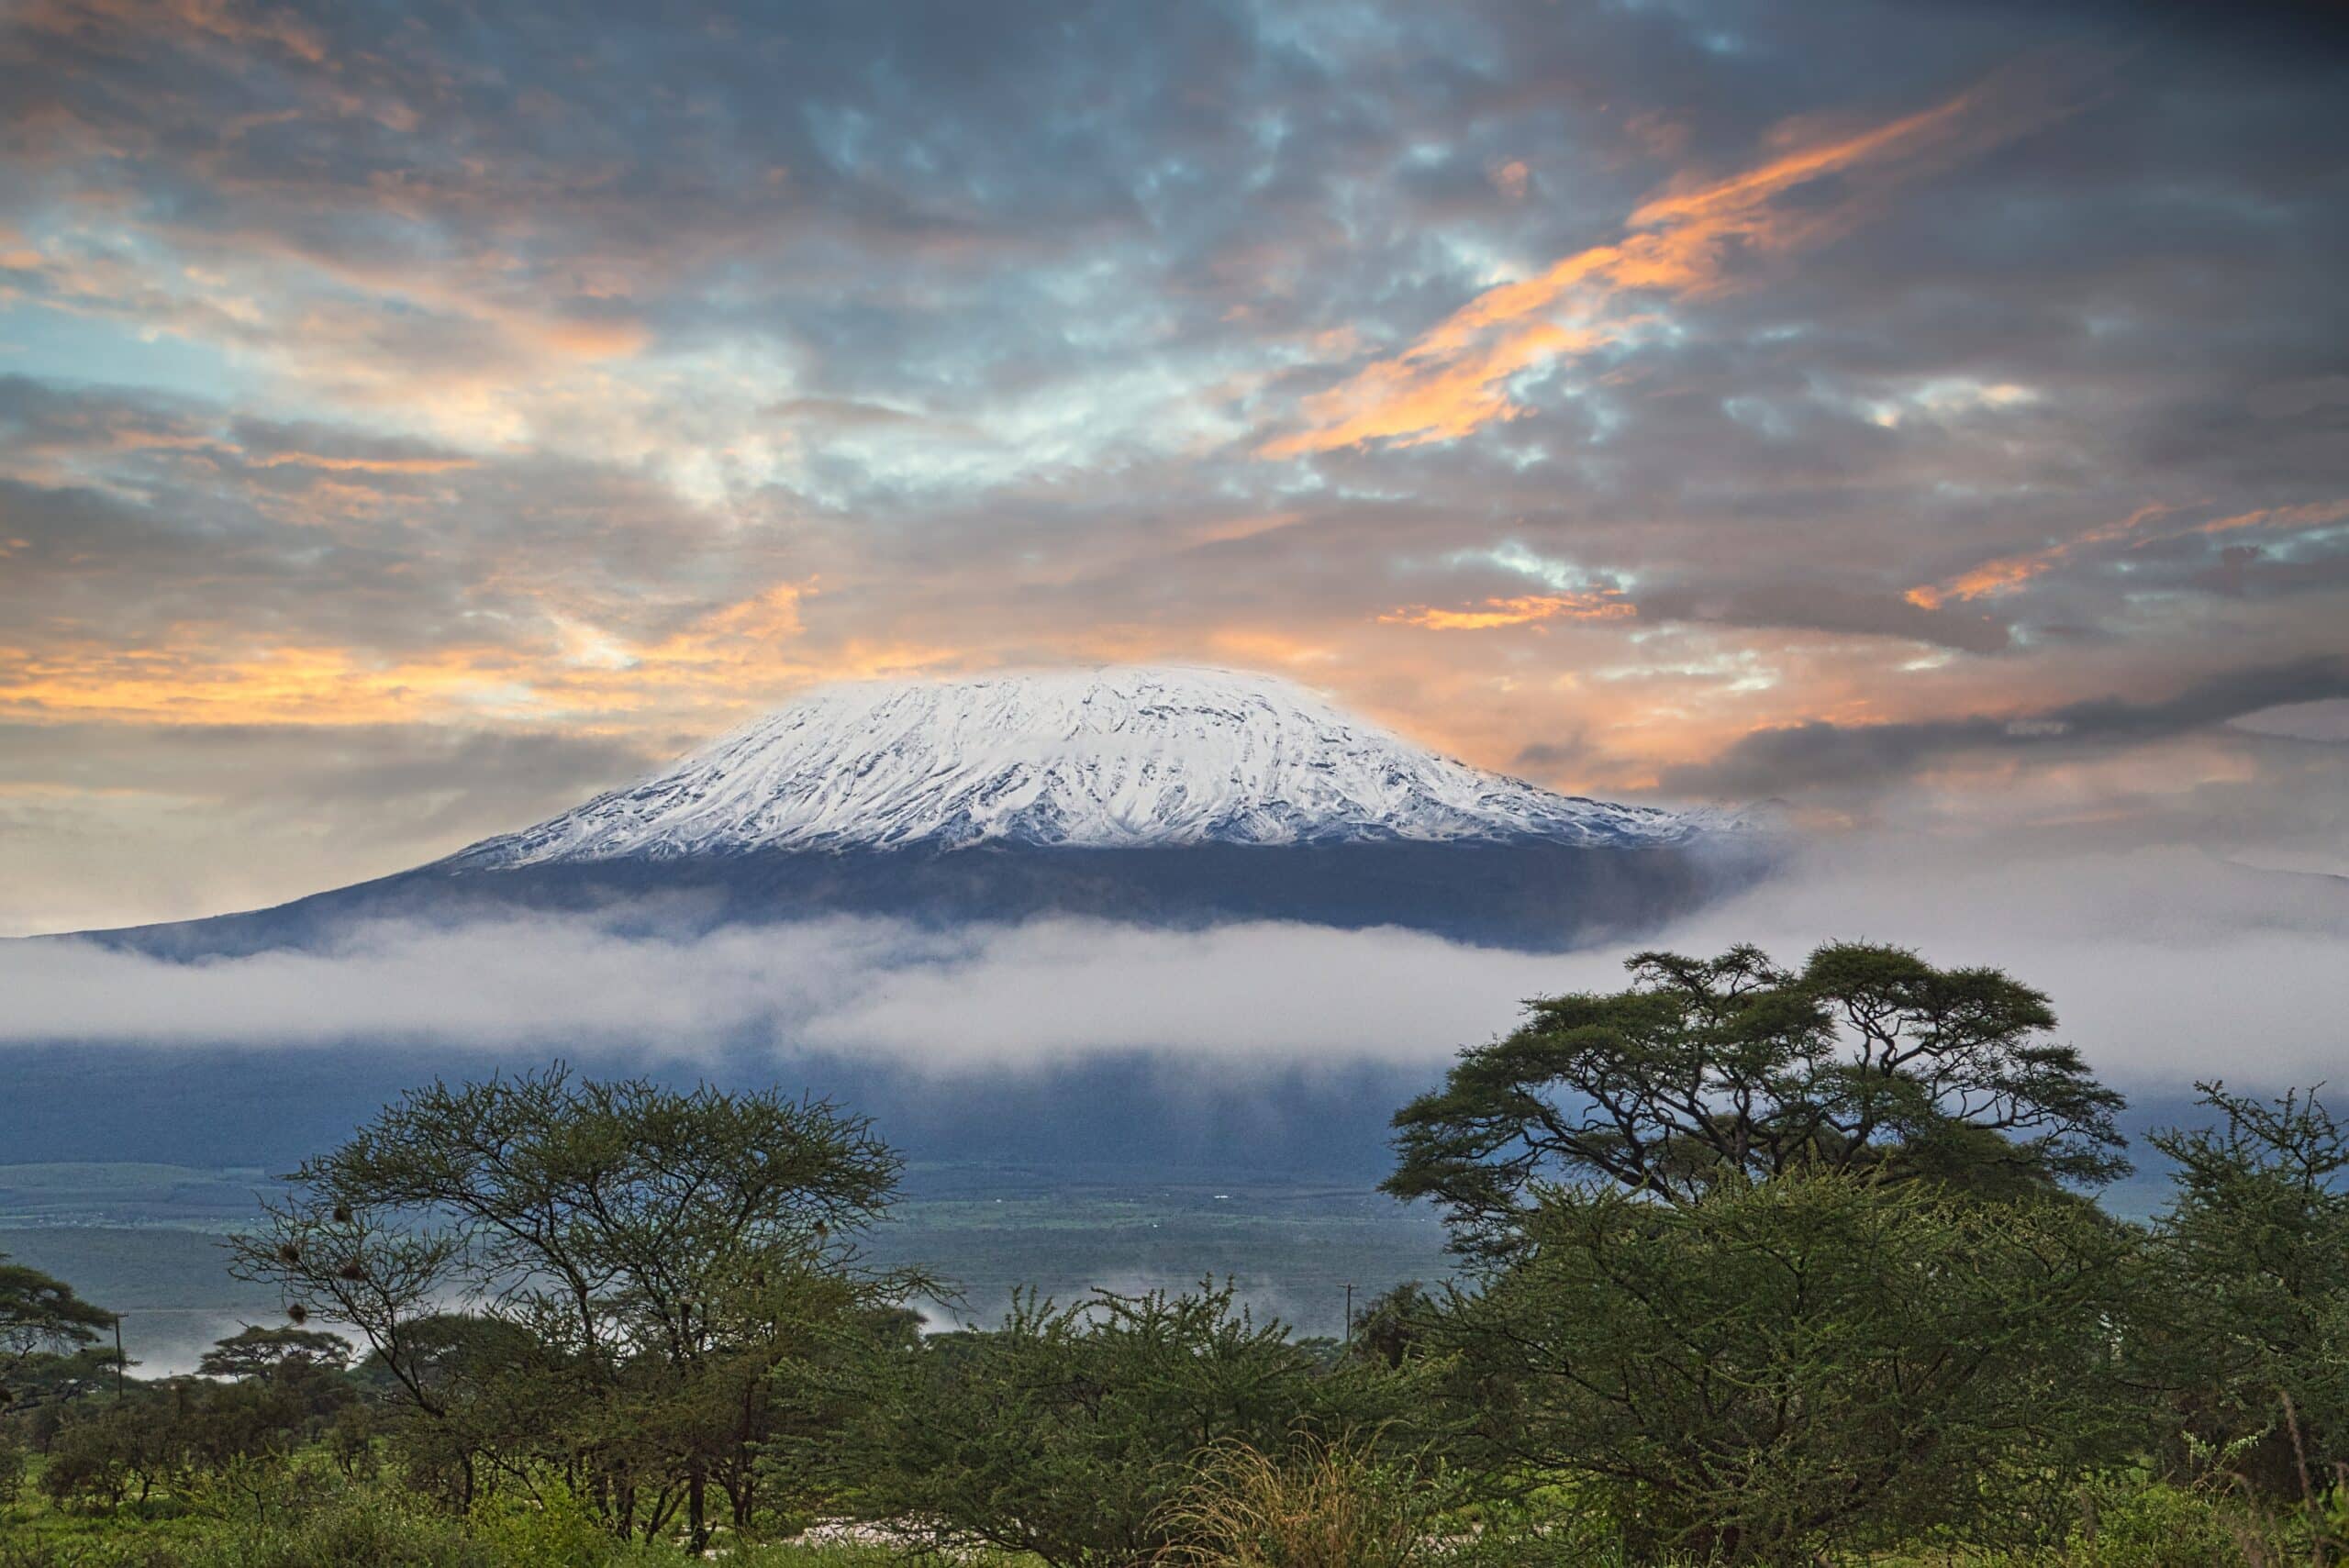 Vue du sommet du mont Kilimandjaro depuis le Kilimandjaro occidental